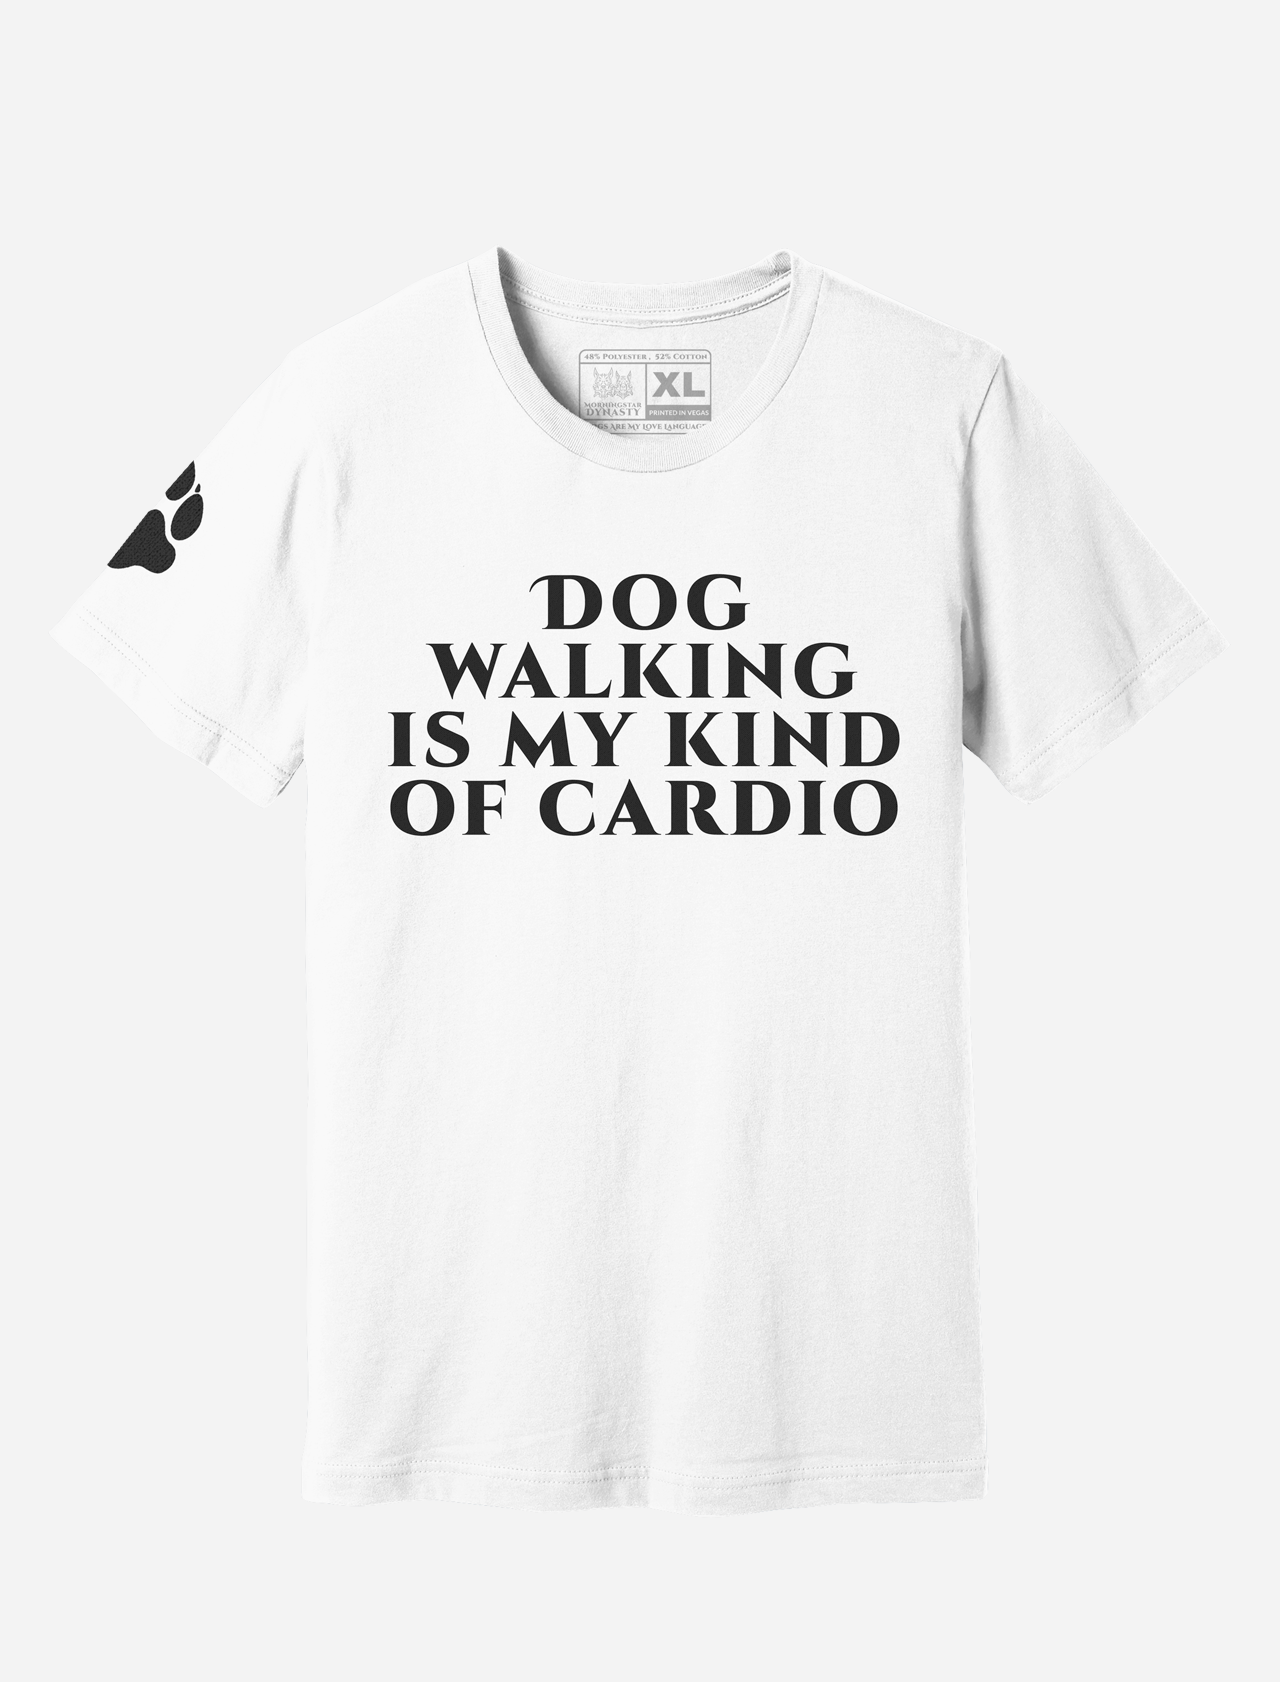 MY KIND OF CARDIO T-Shirt